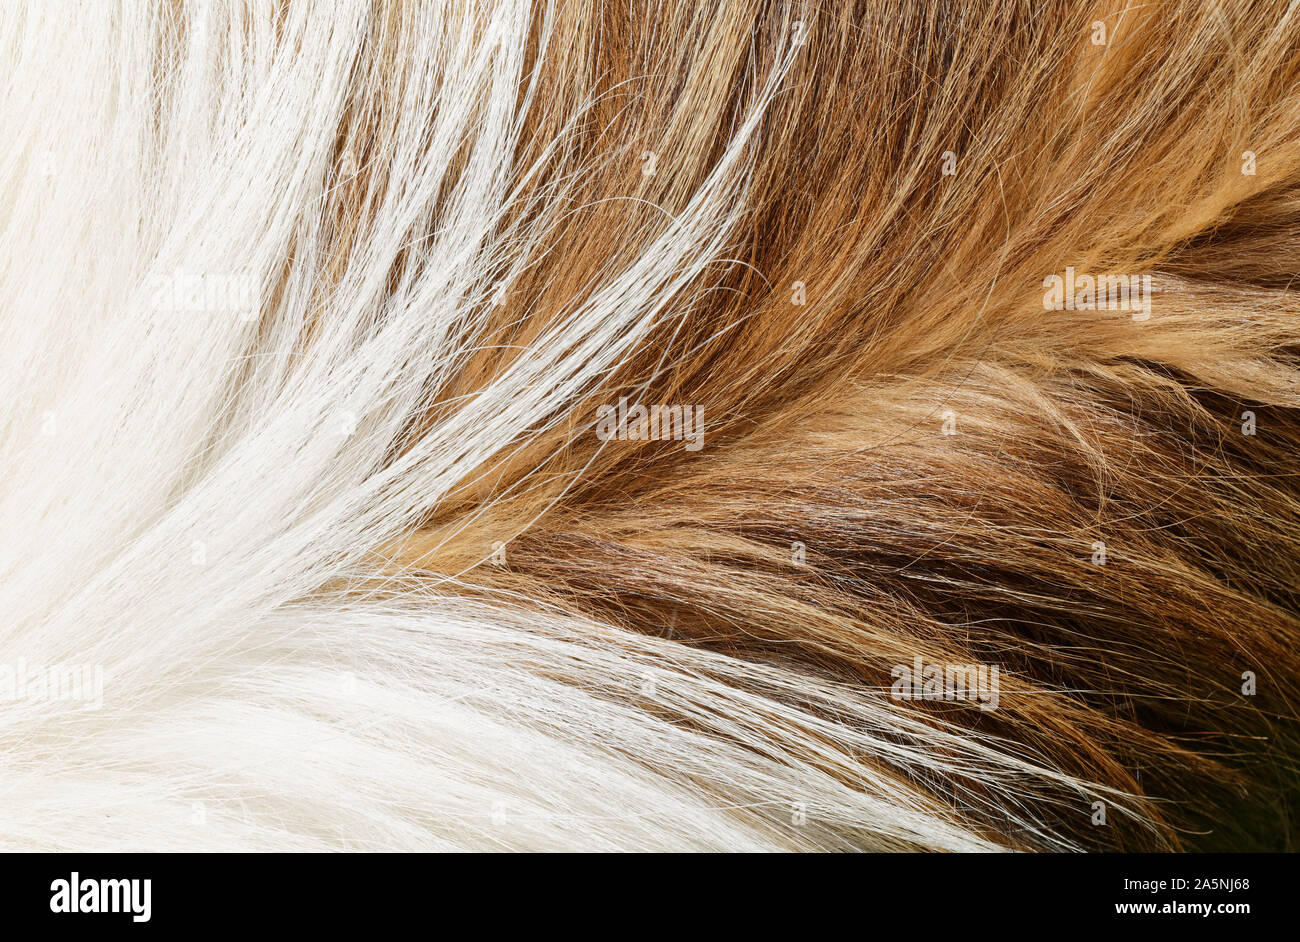 Collie dog fur animal hair texture or background macro Stock Photo